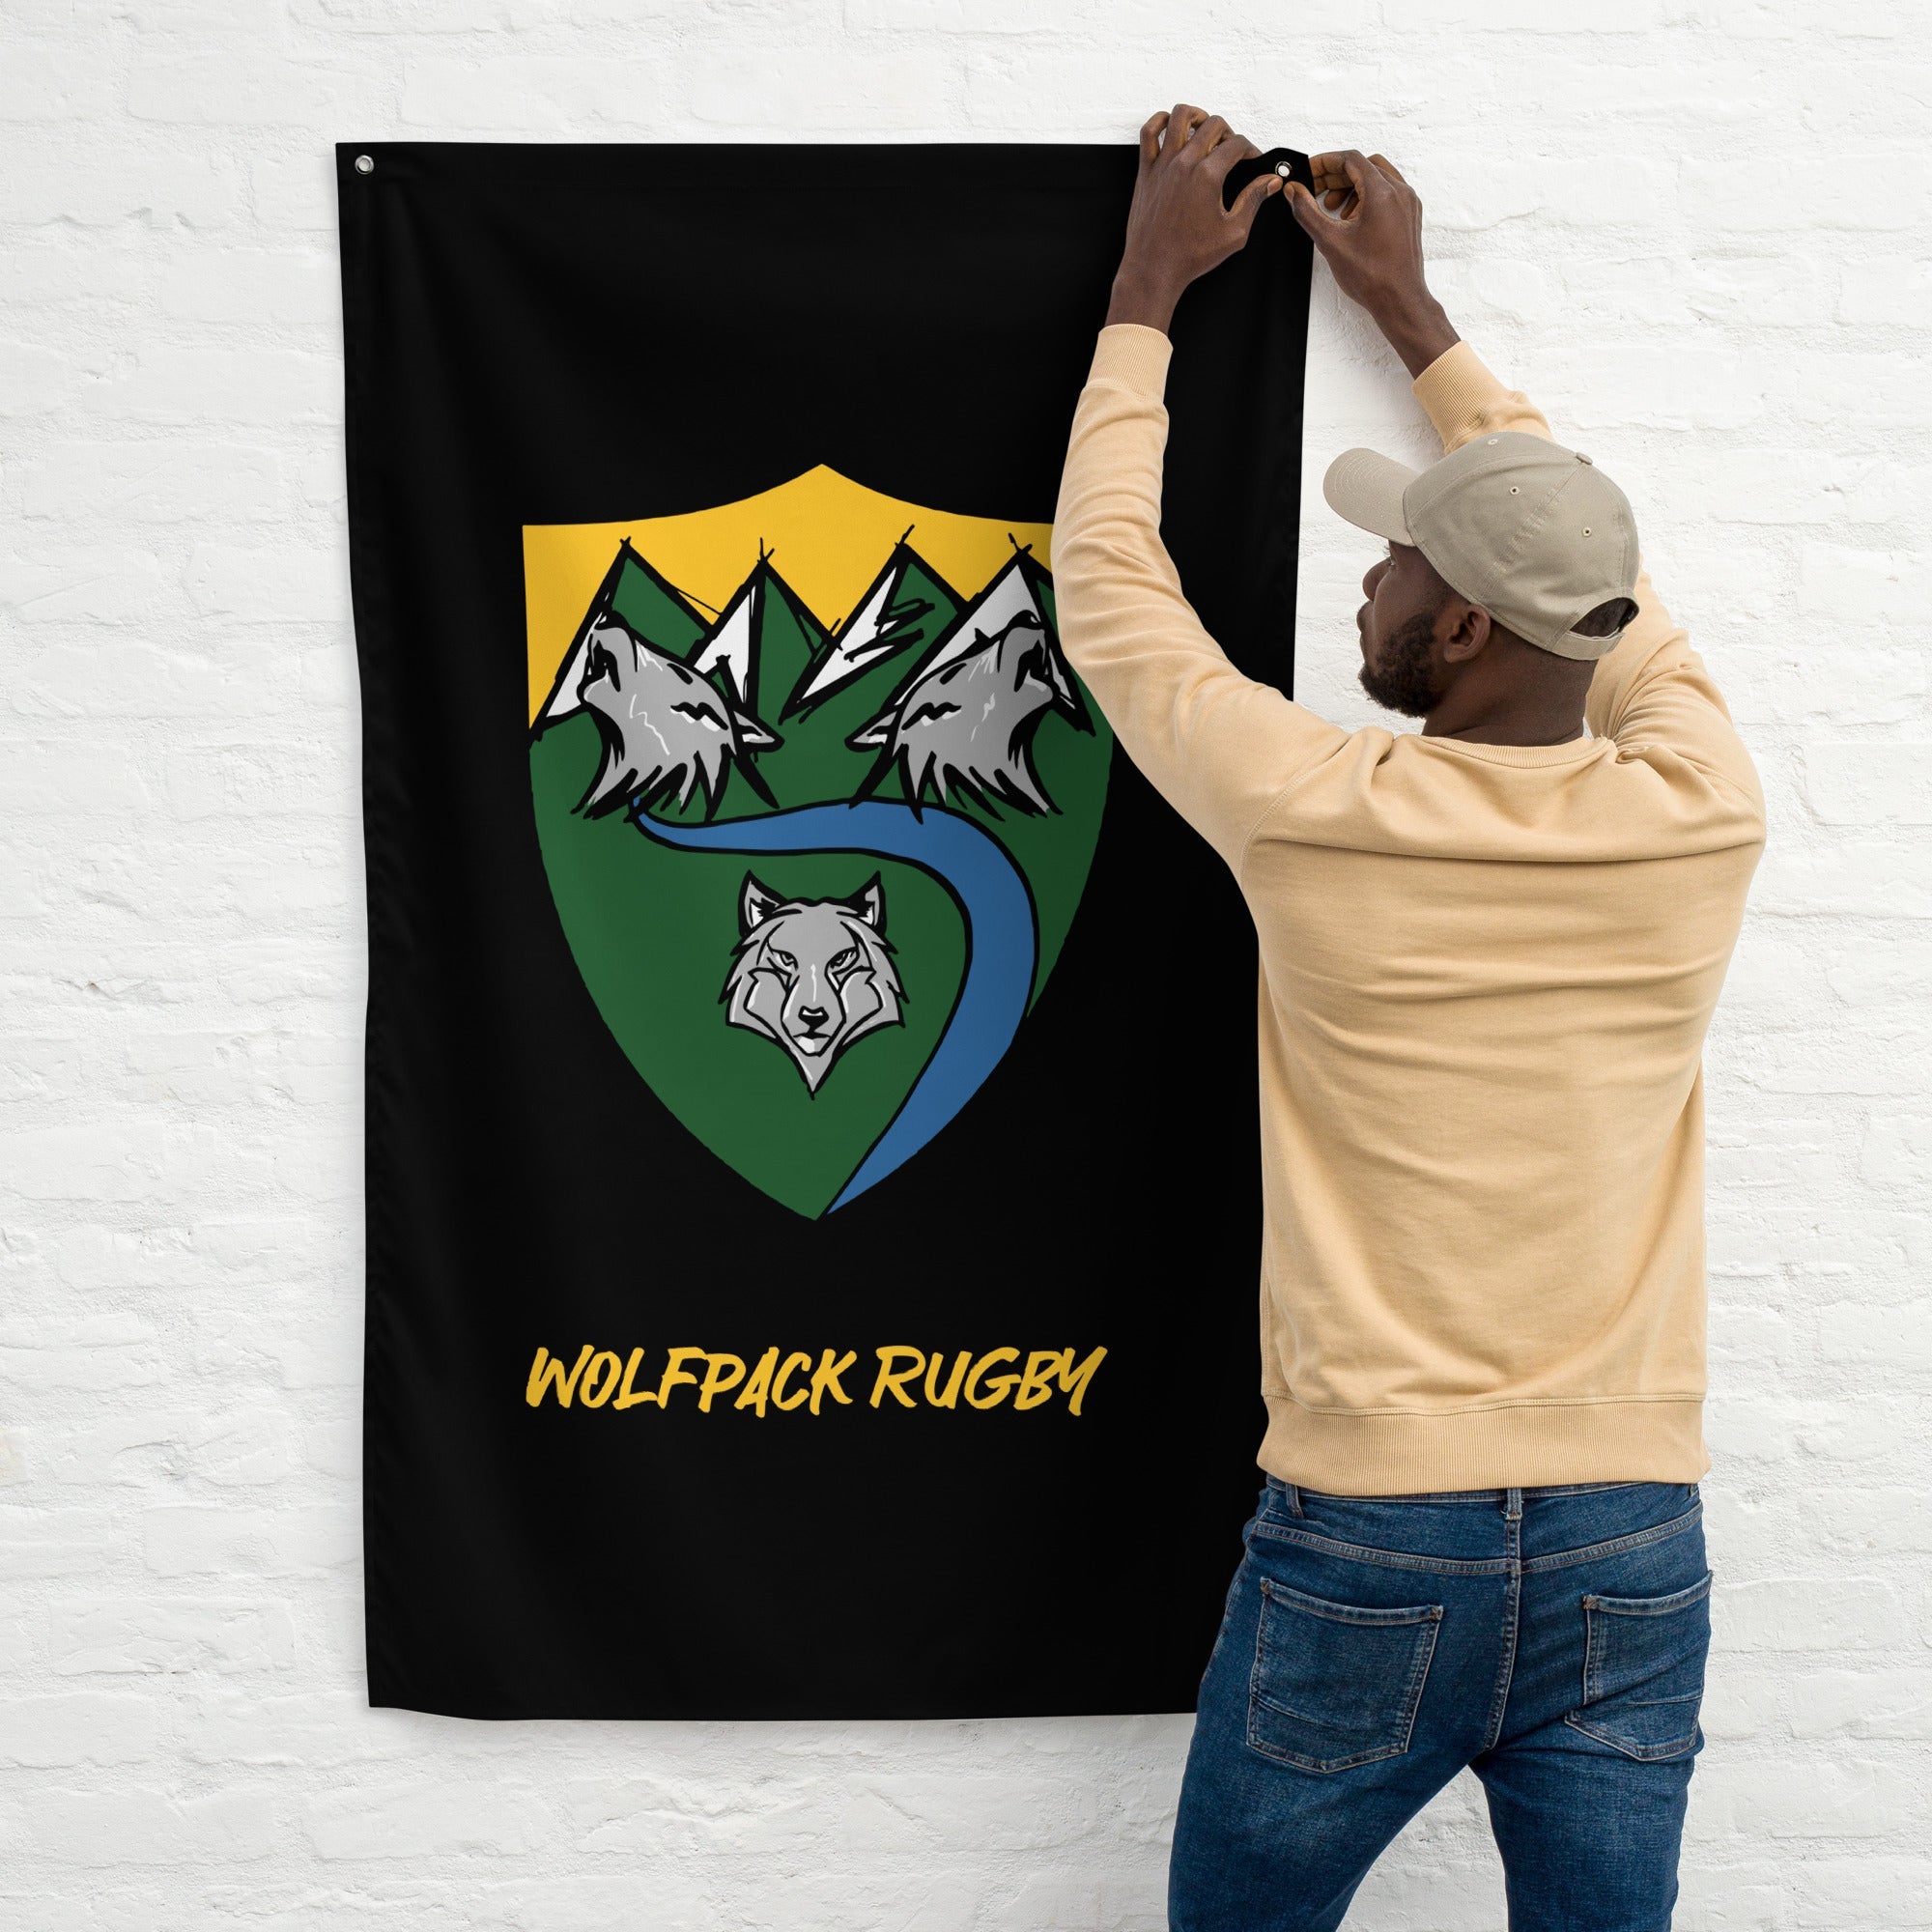 Rugby Imports Kenai River RFC Wall Flag